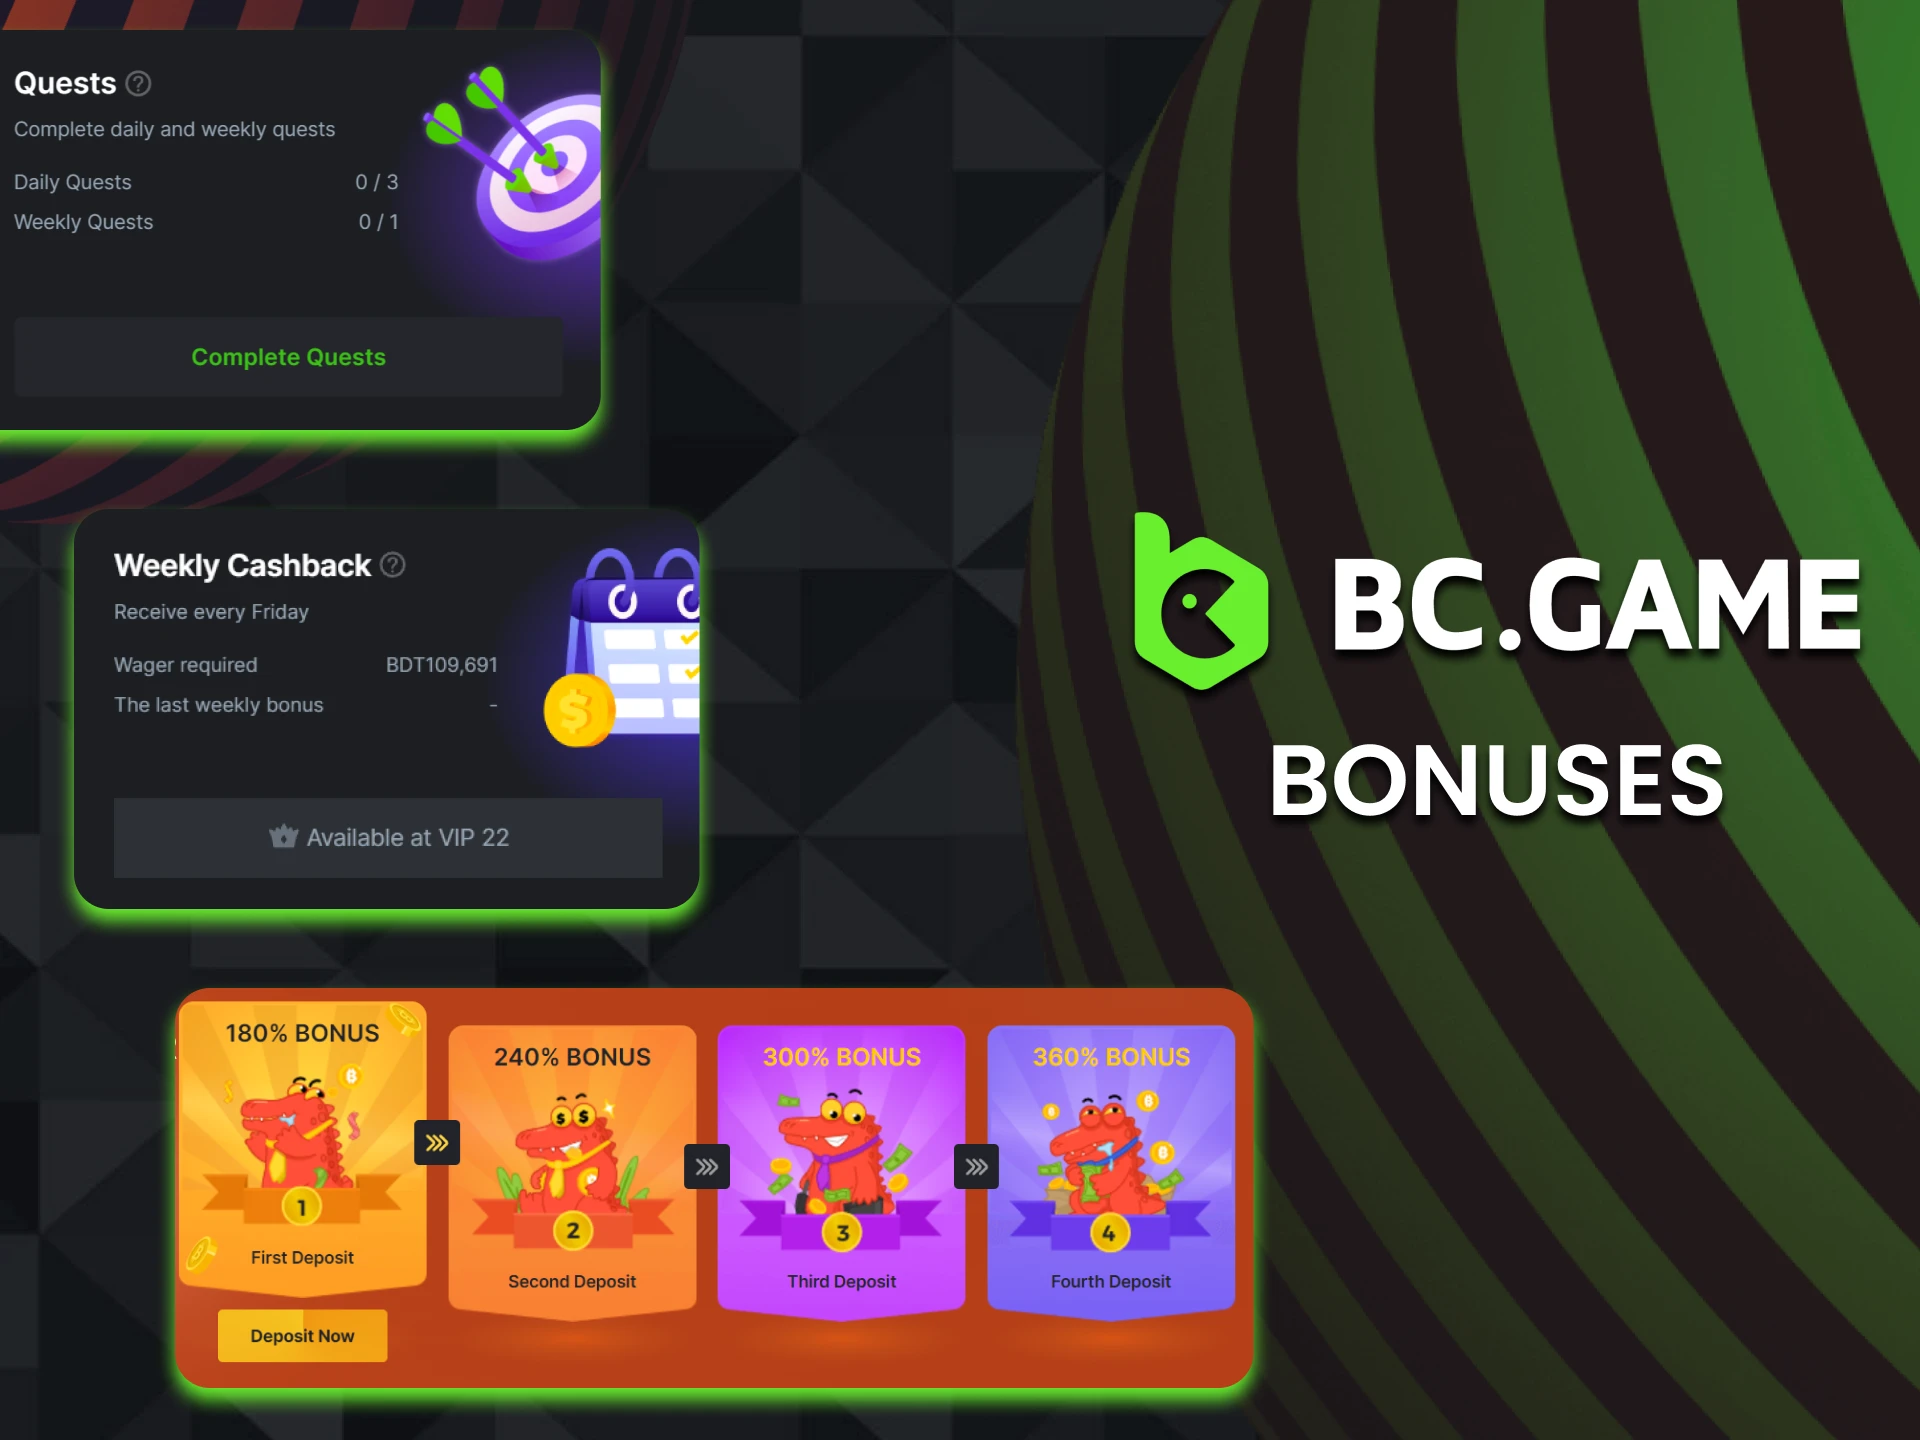 BC Game gives many bonuses for playing blackjack.